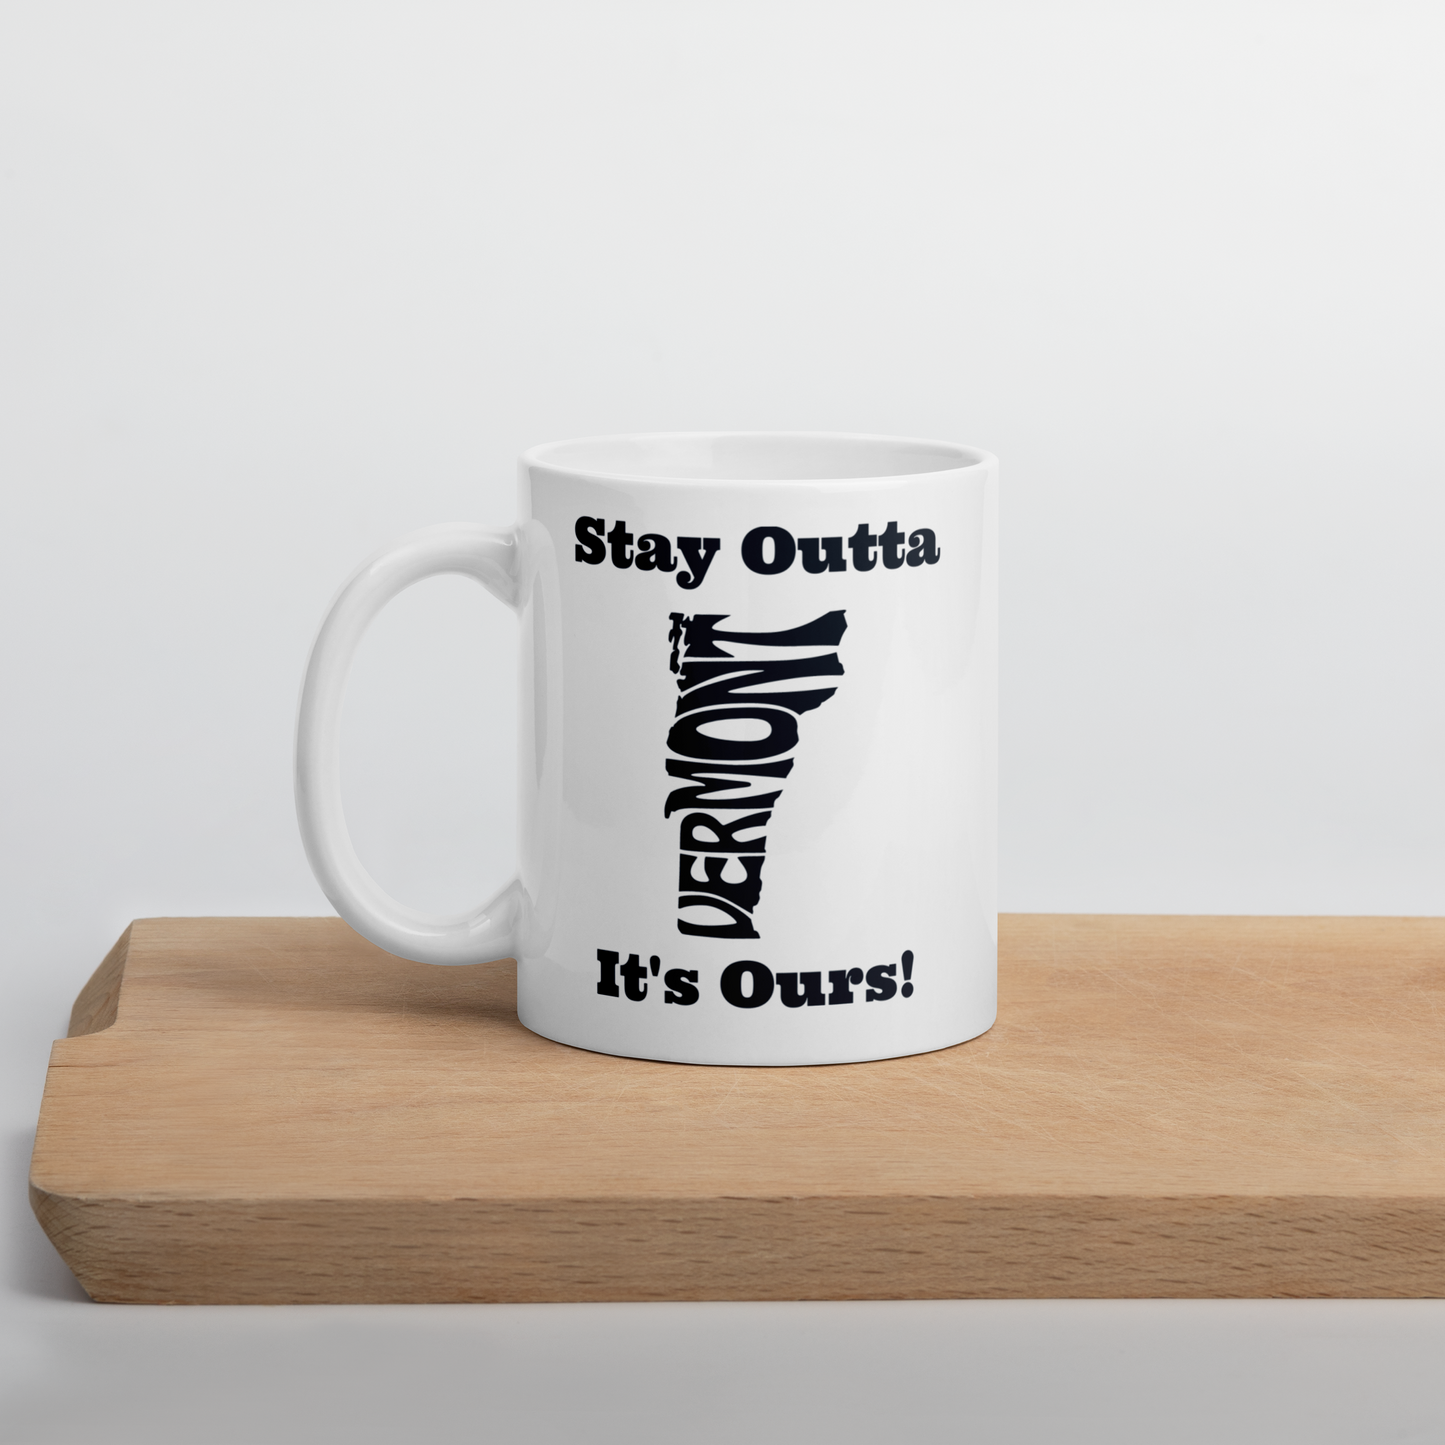 Stay Outta Vermont - Black Font - White Glossy Mug